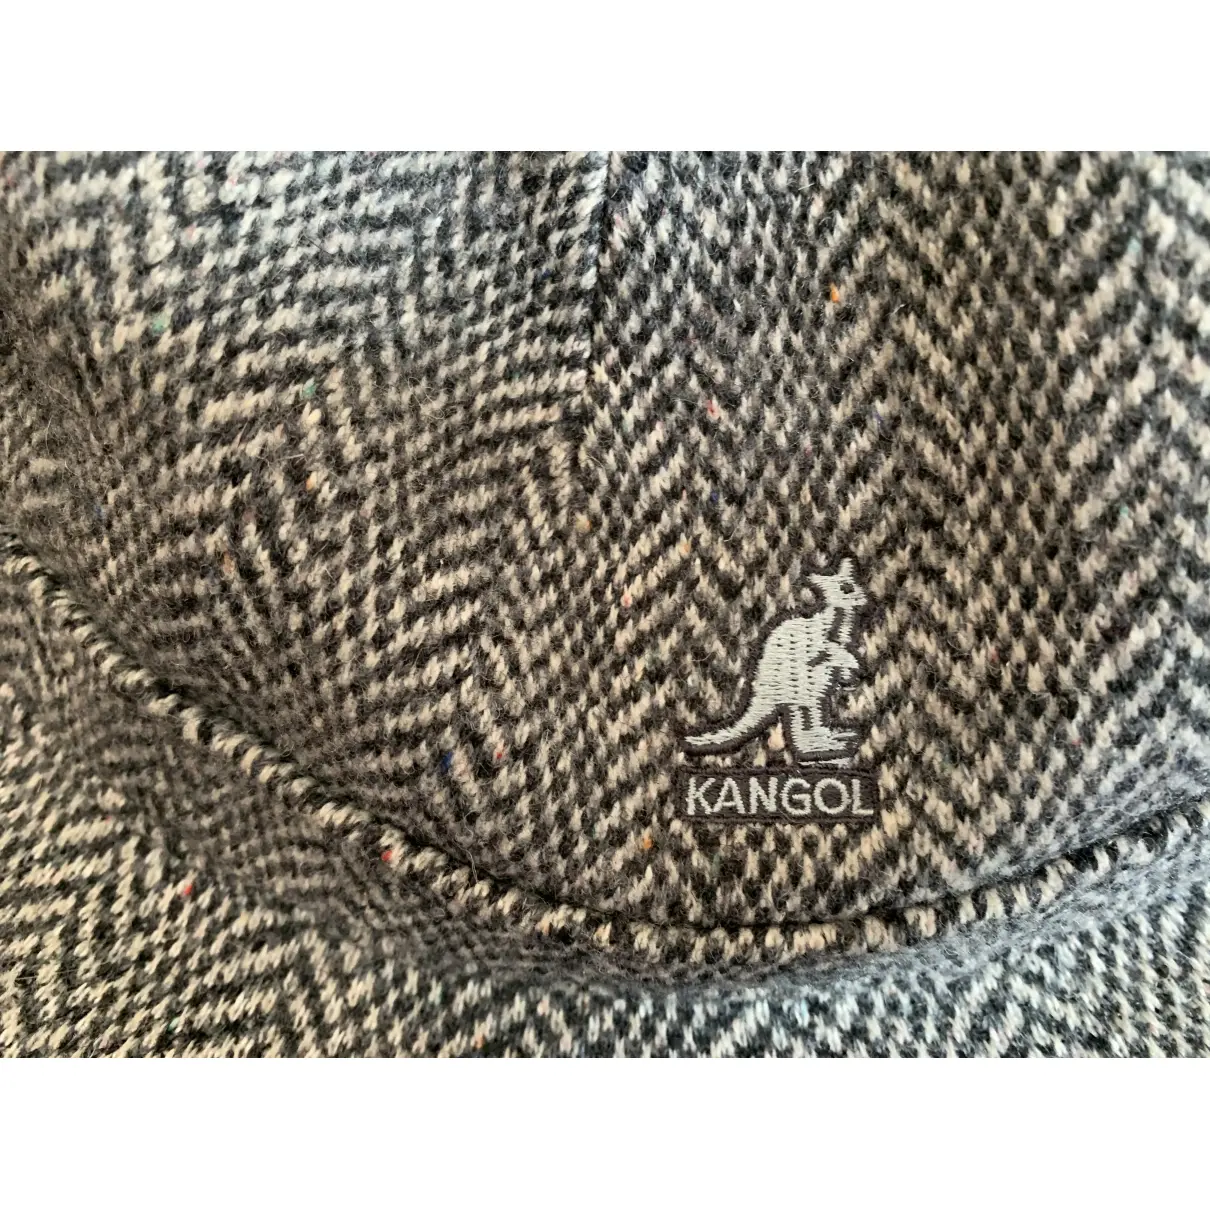 Buy Kangol Wool hat online